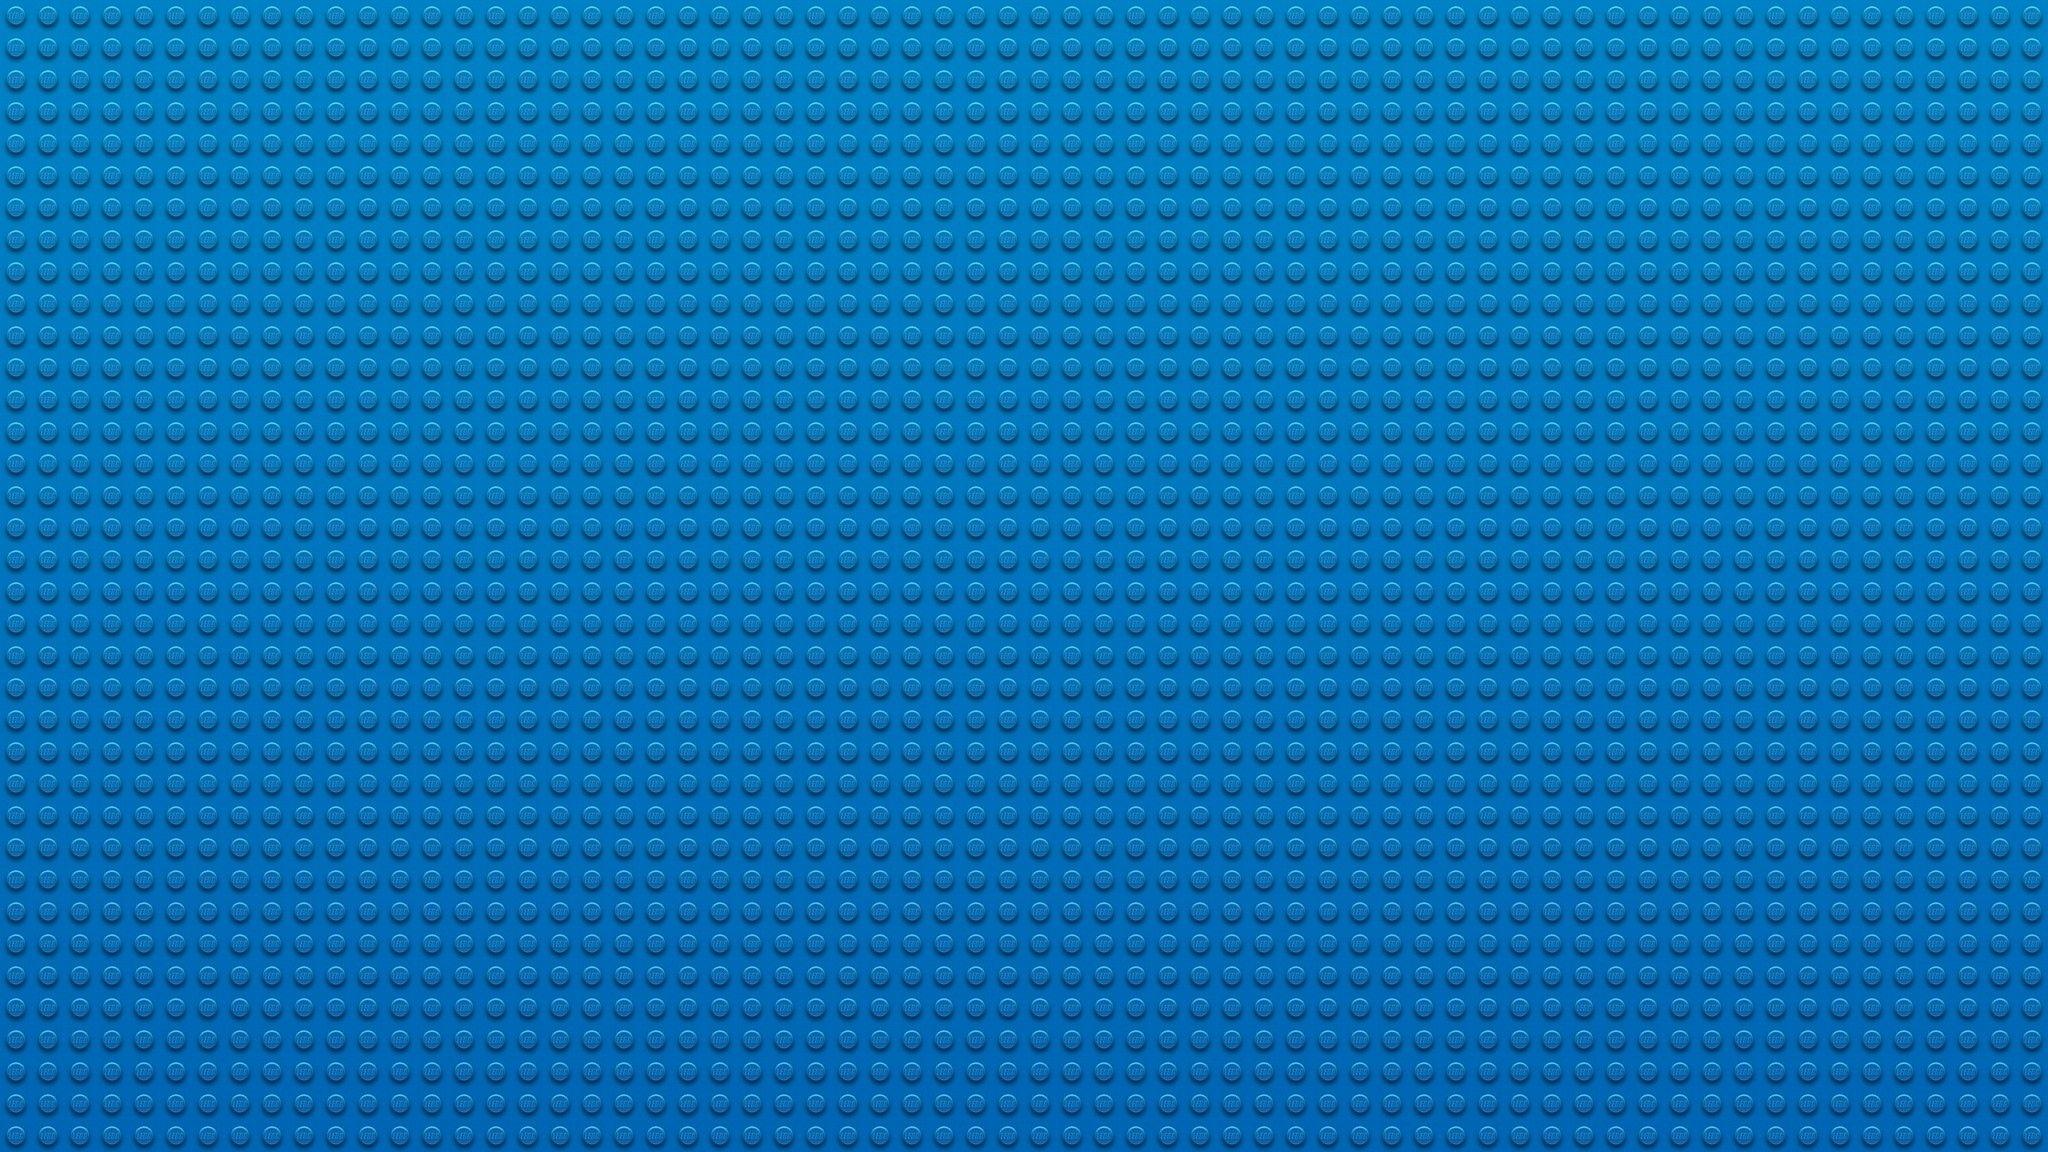 Lego backgroundDownload free cool full HD wallpaper